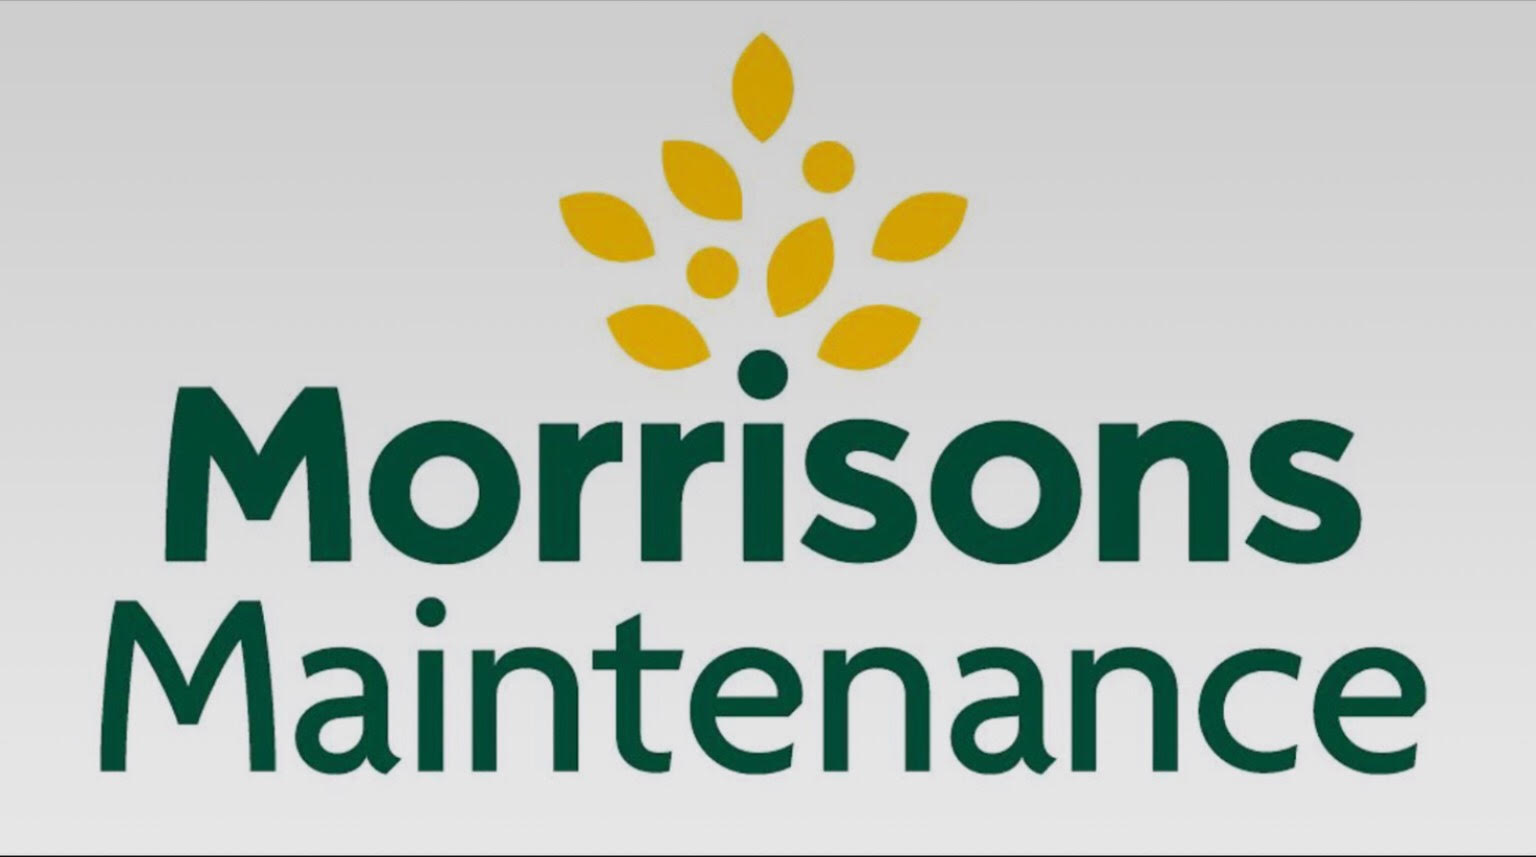 Morrisons Maintenance Fresh Look Audit Ver 1.0